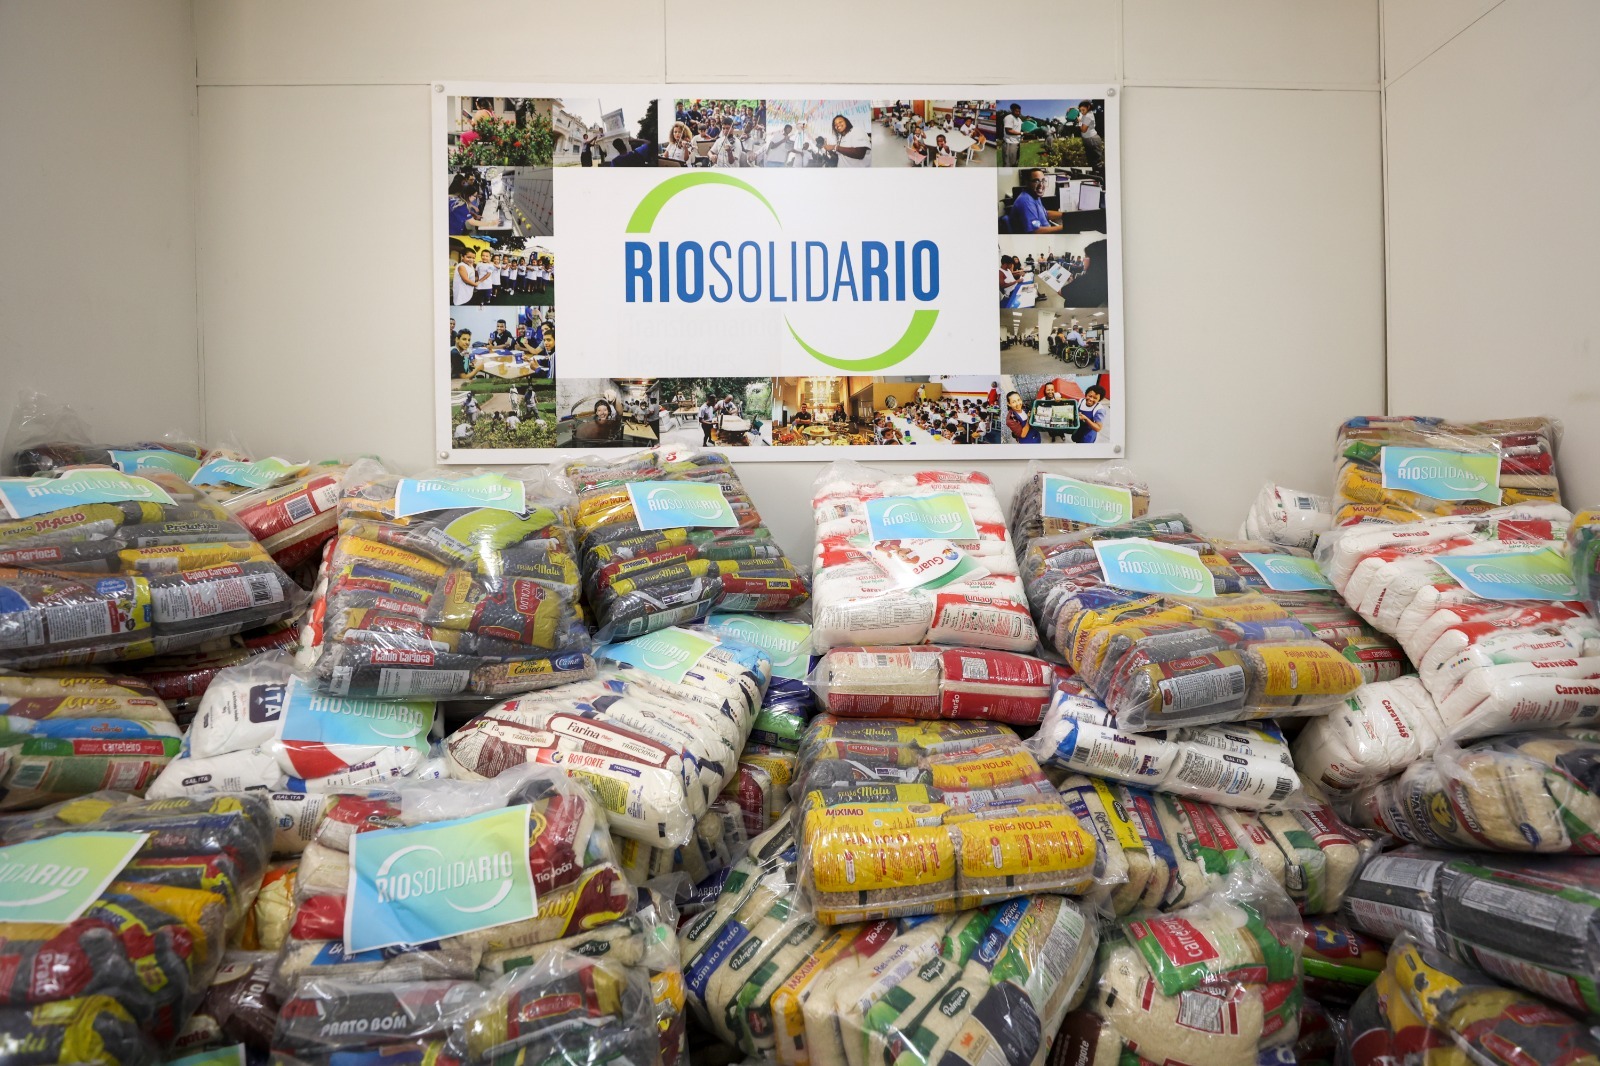 Cultura do Rio de Janeiro e Riosolidario se unem para arrecadar doações para as vítimas das chuvas